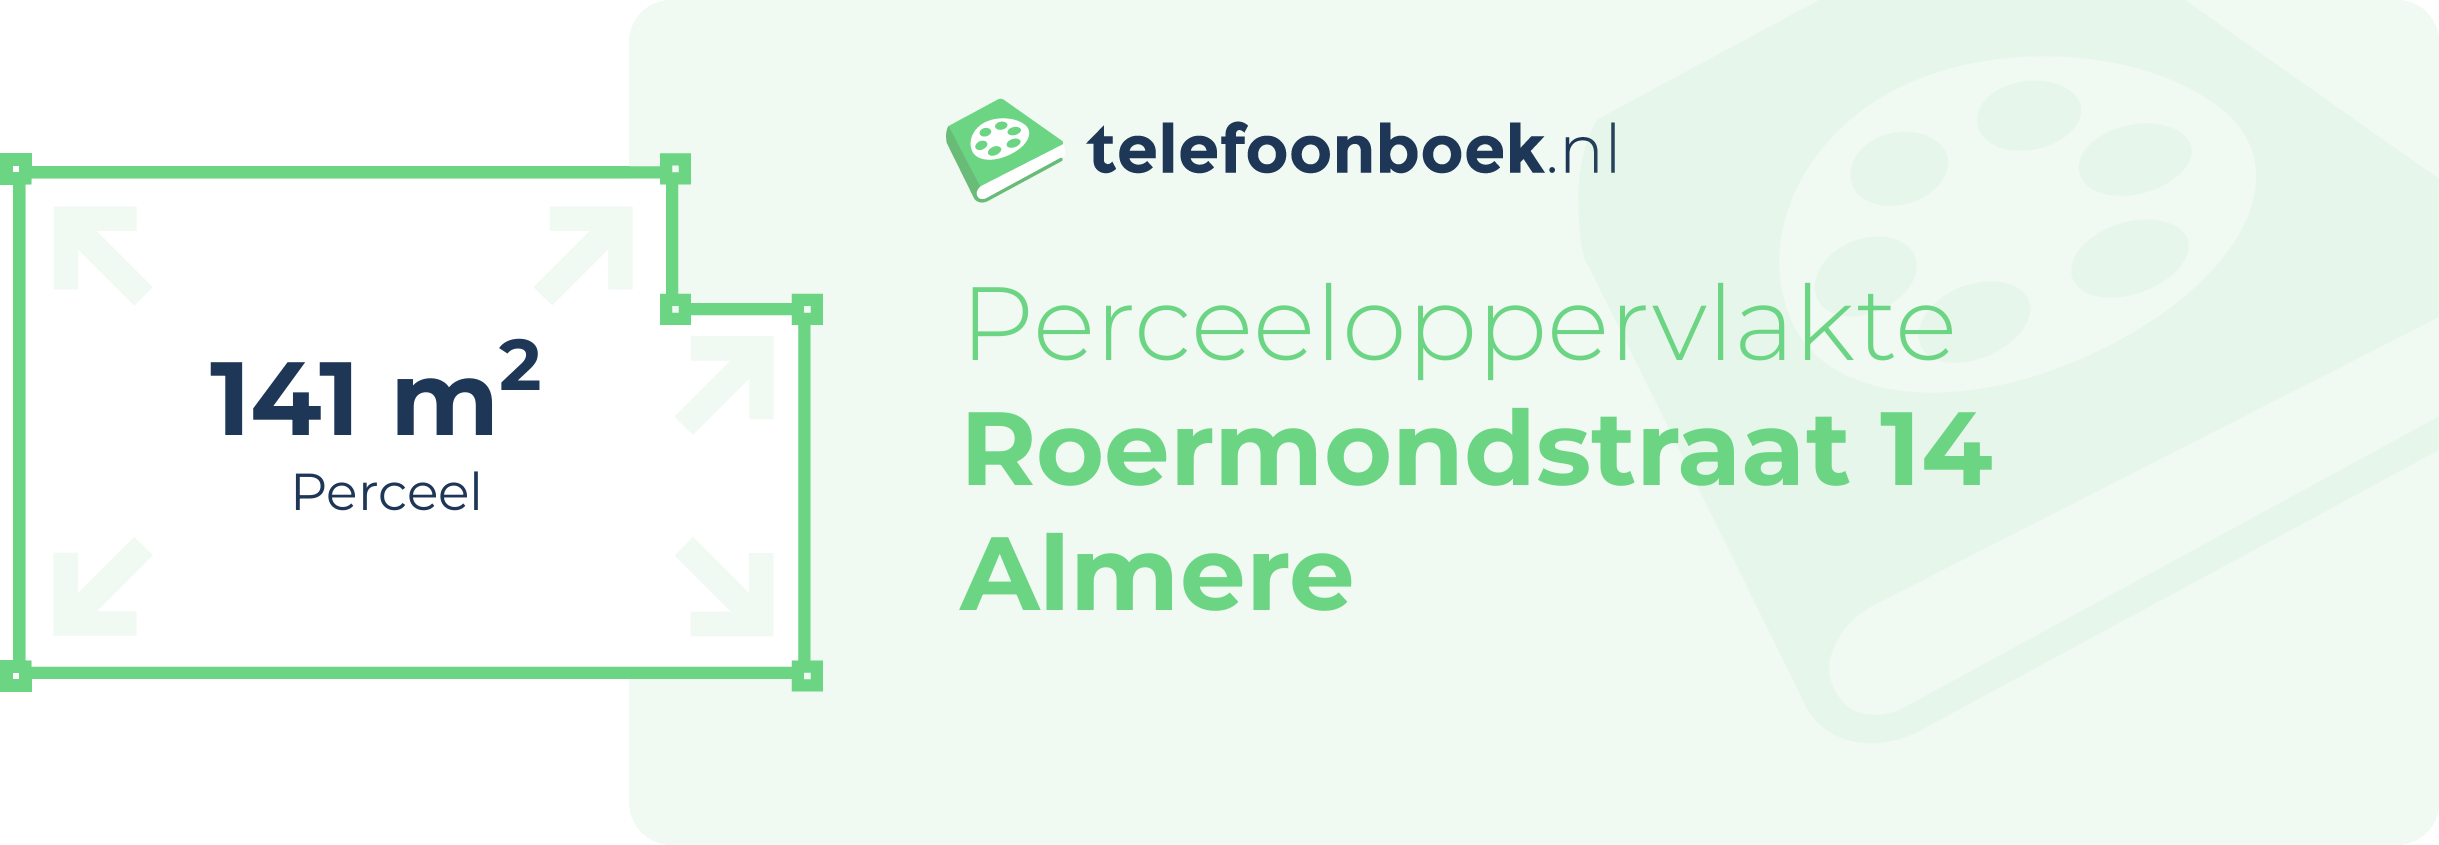 Perceeloppervlakte Roermondstraat 14 Almere